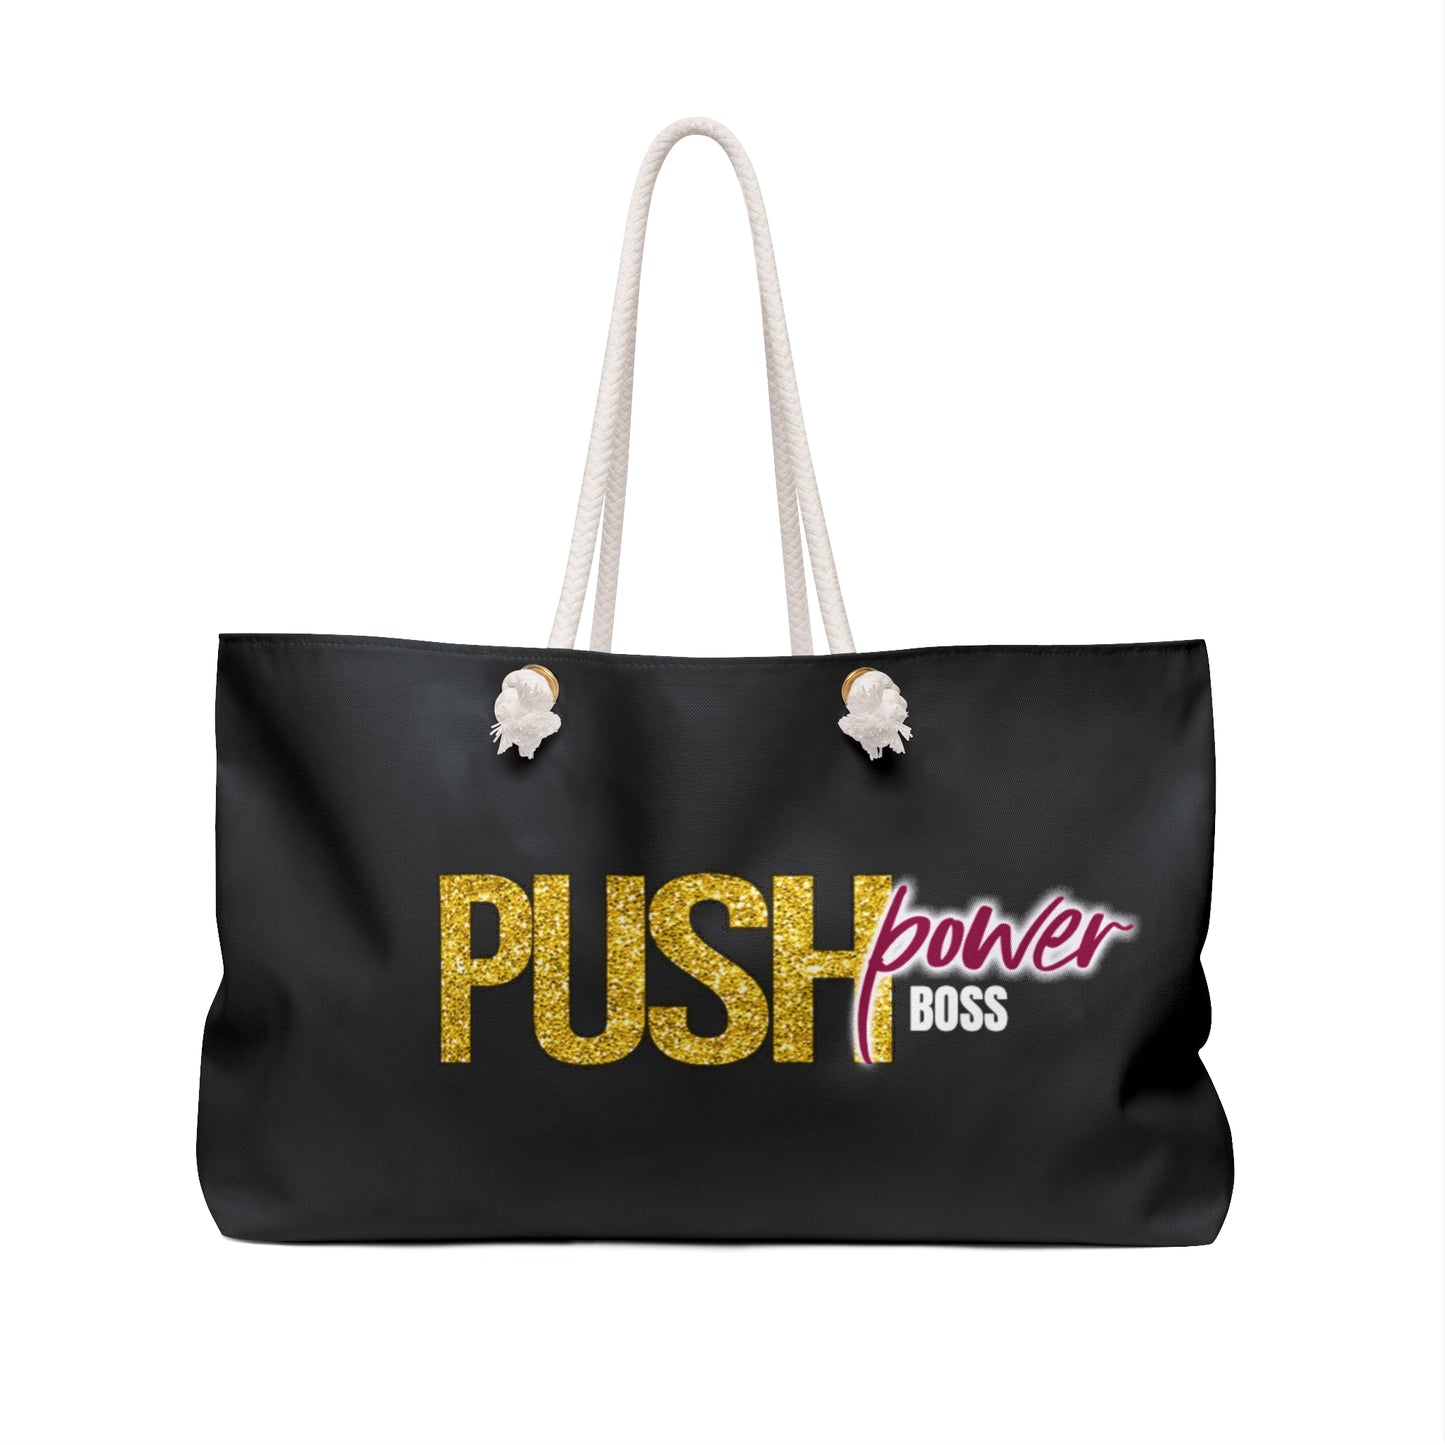 Push Power Boss Weekender Bag (Black Color)